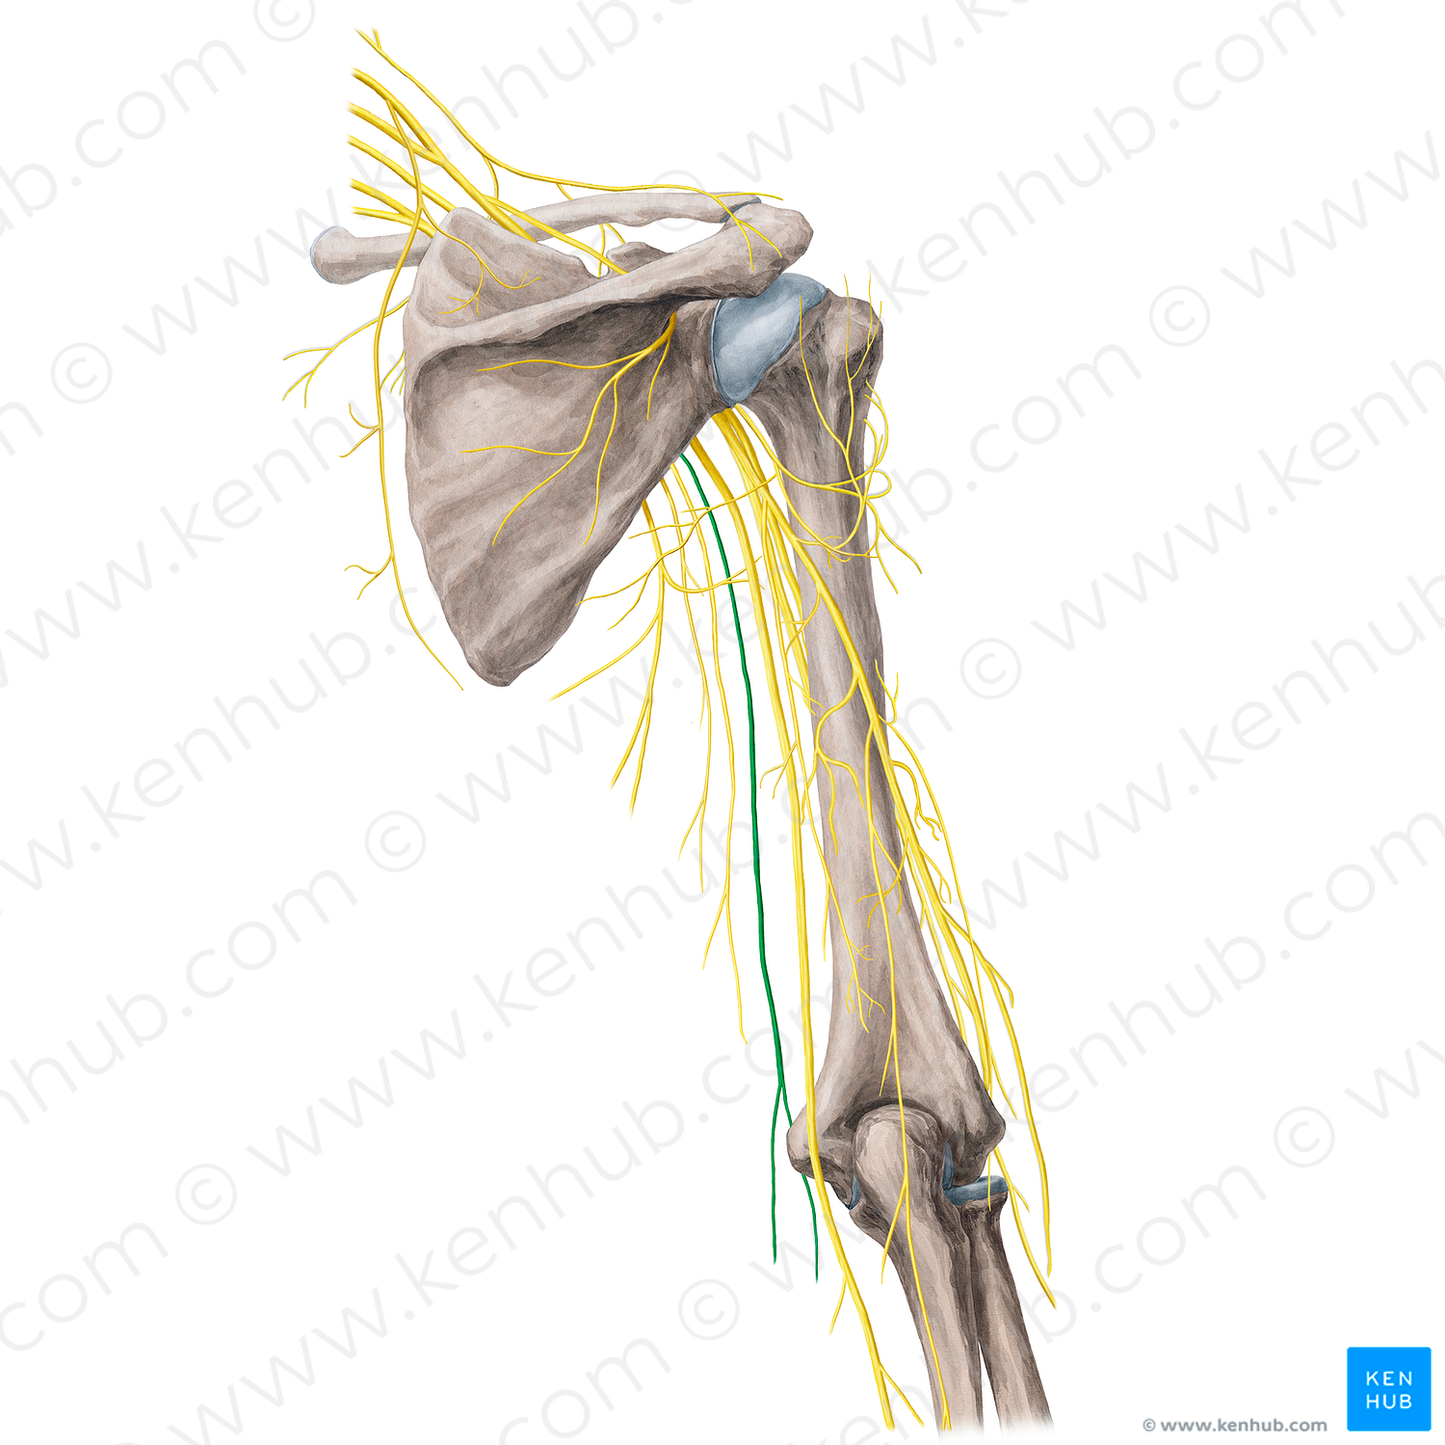 Medial antebrachial cutaneous nerve (#21771)